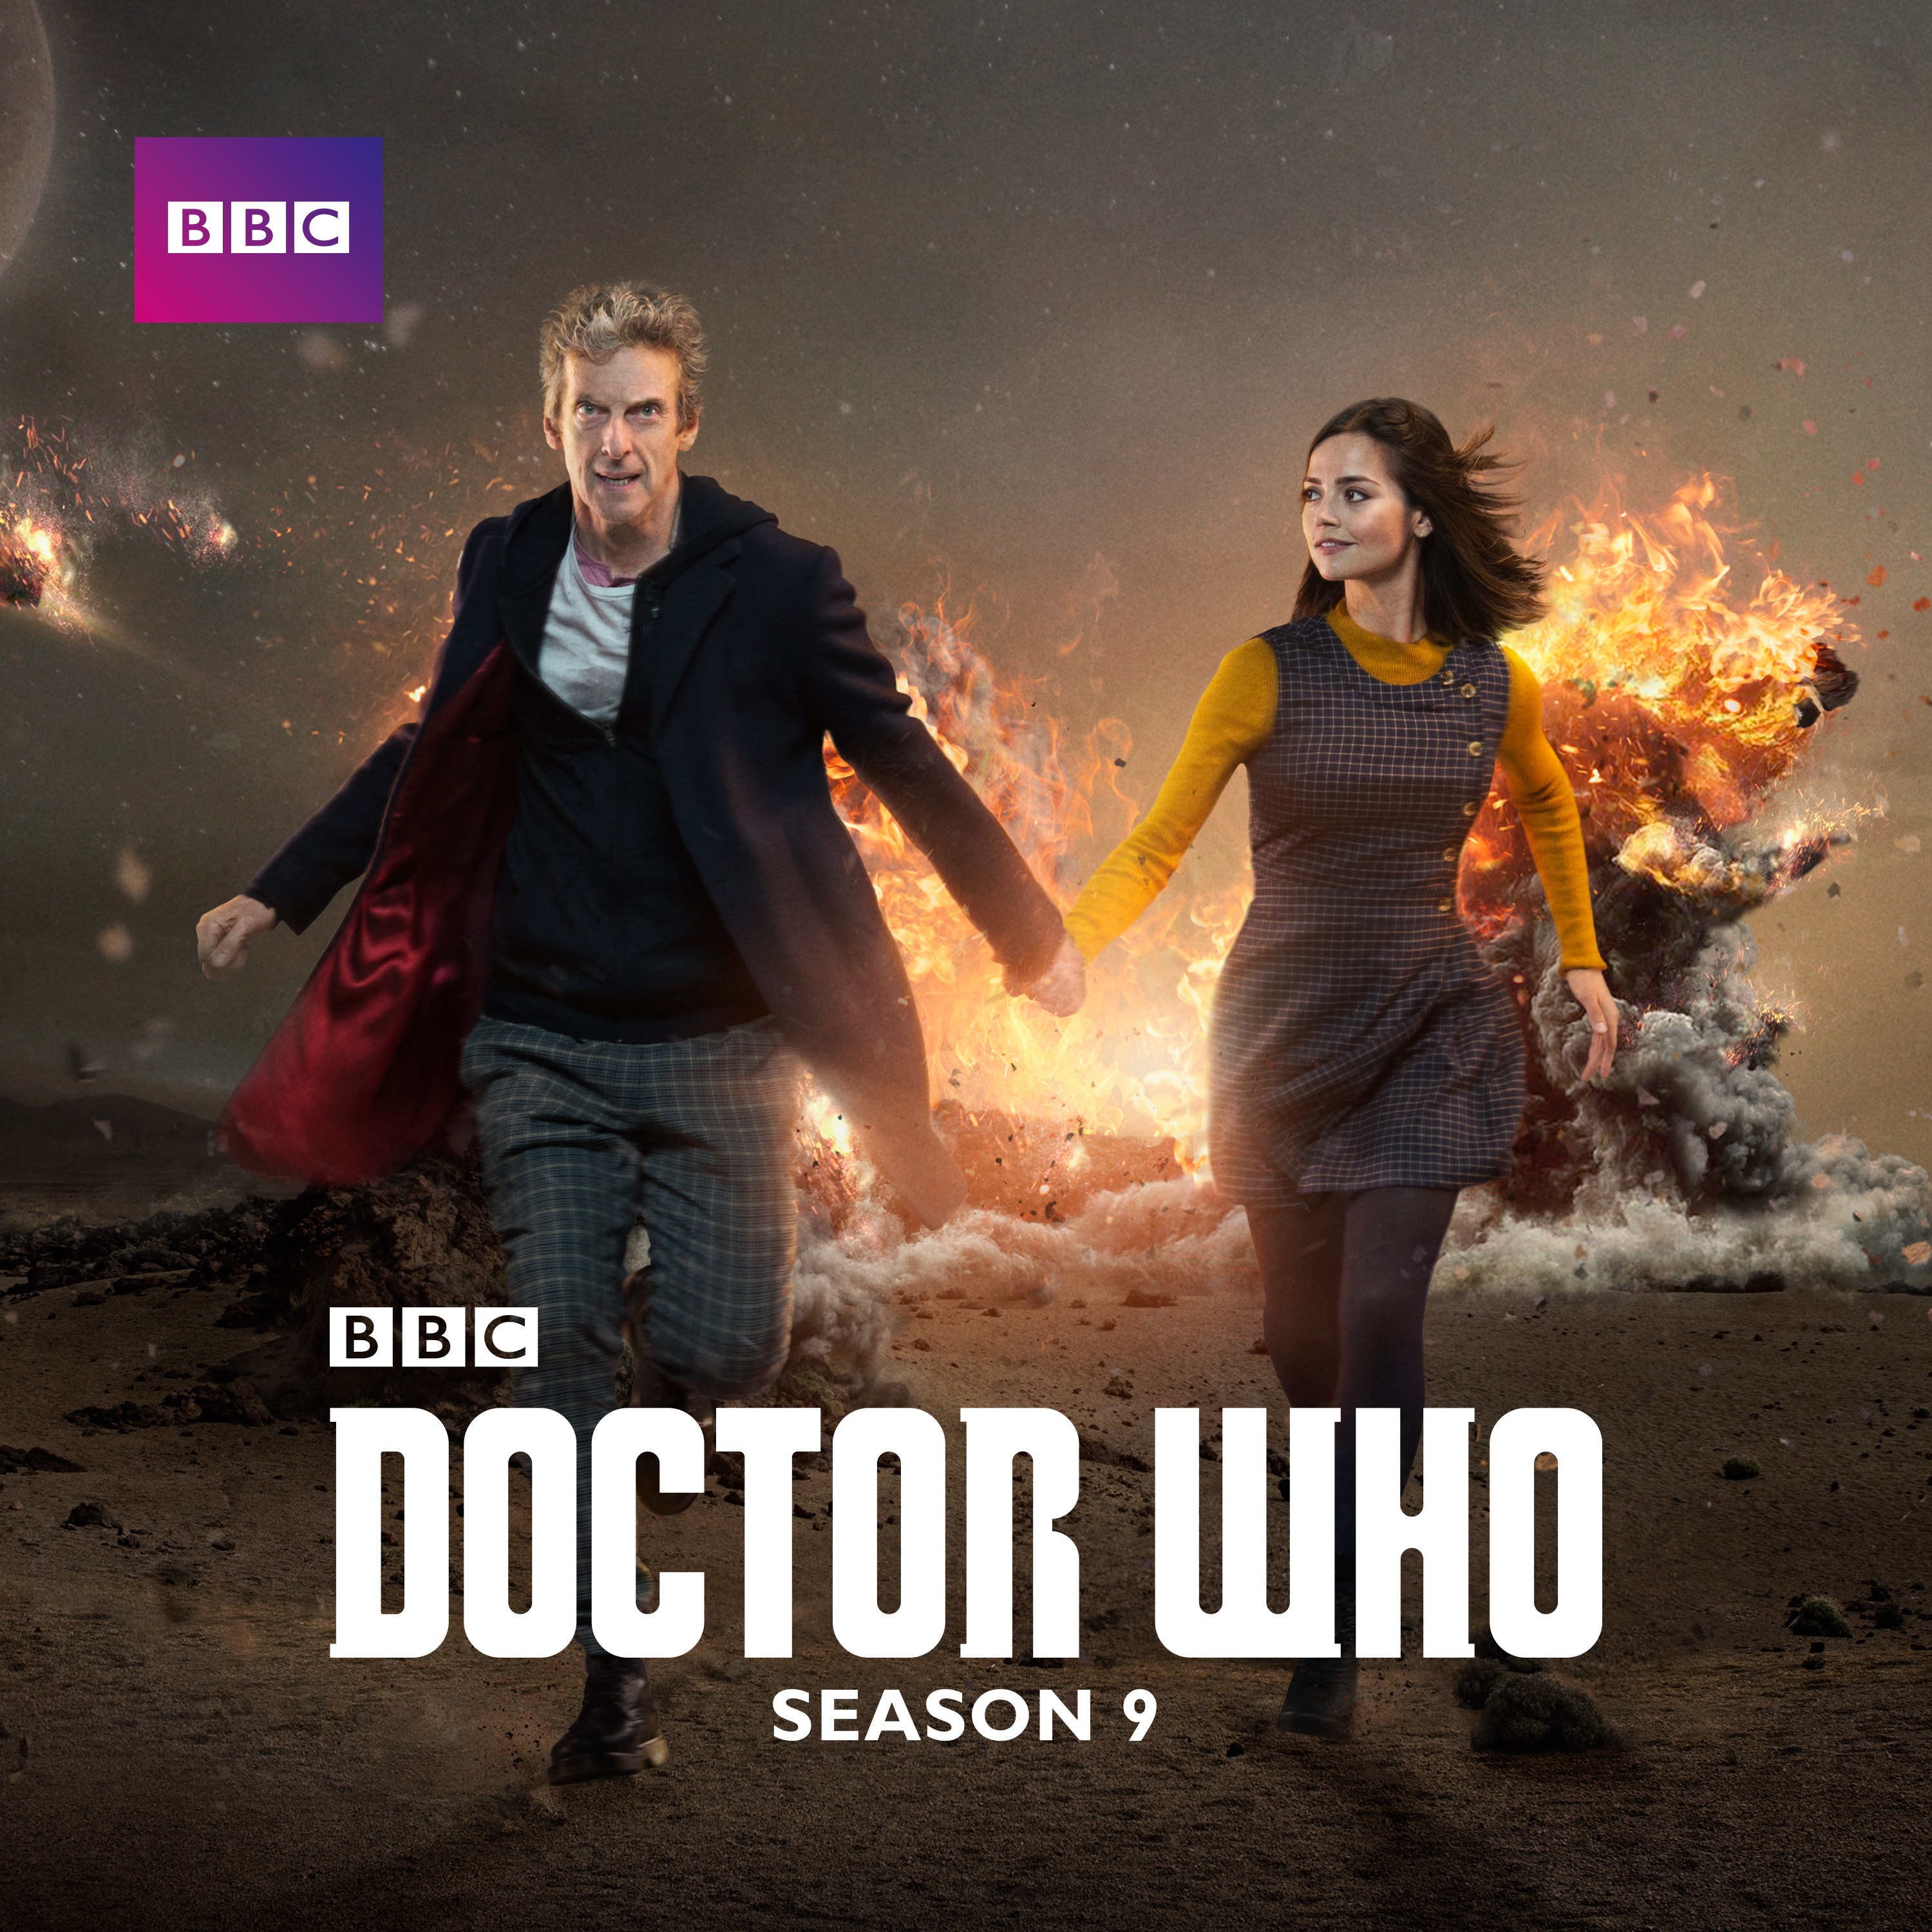 Doctor Who season 11 - Wikipedia